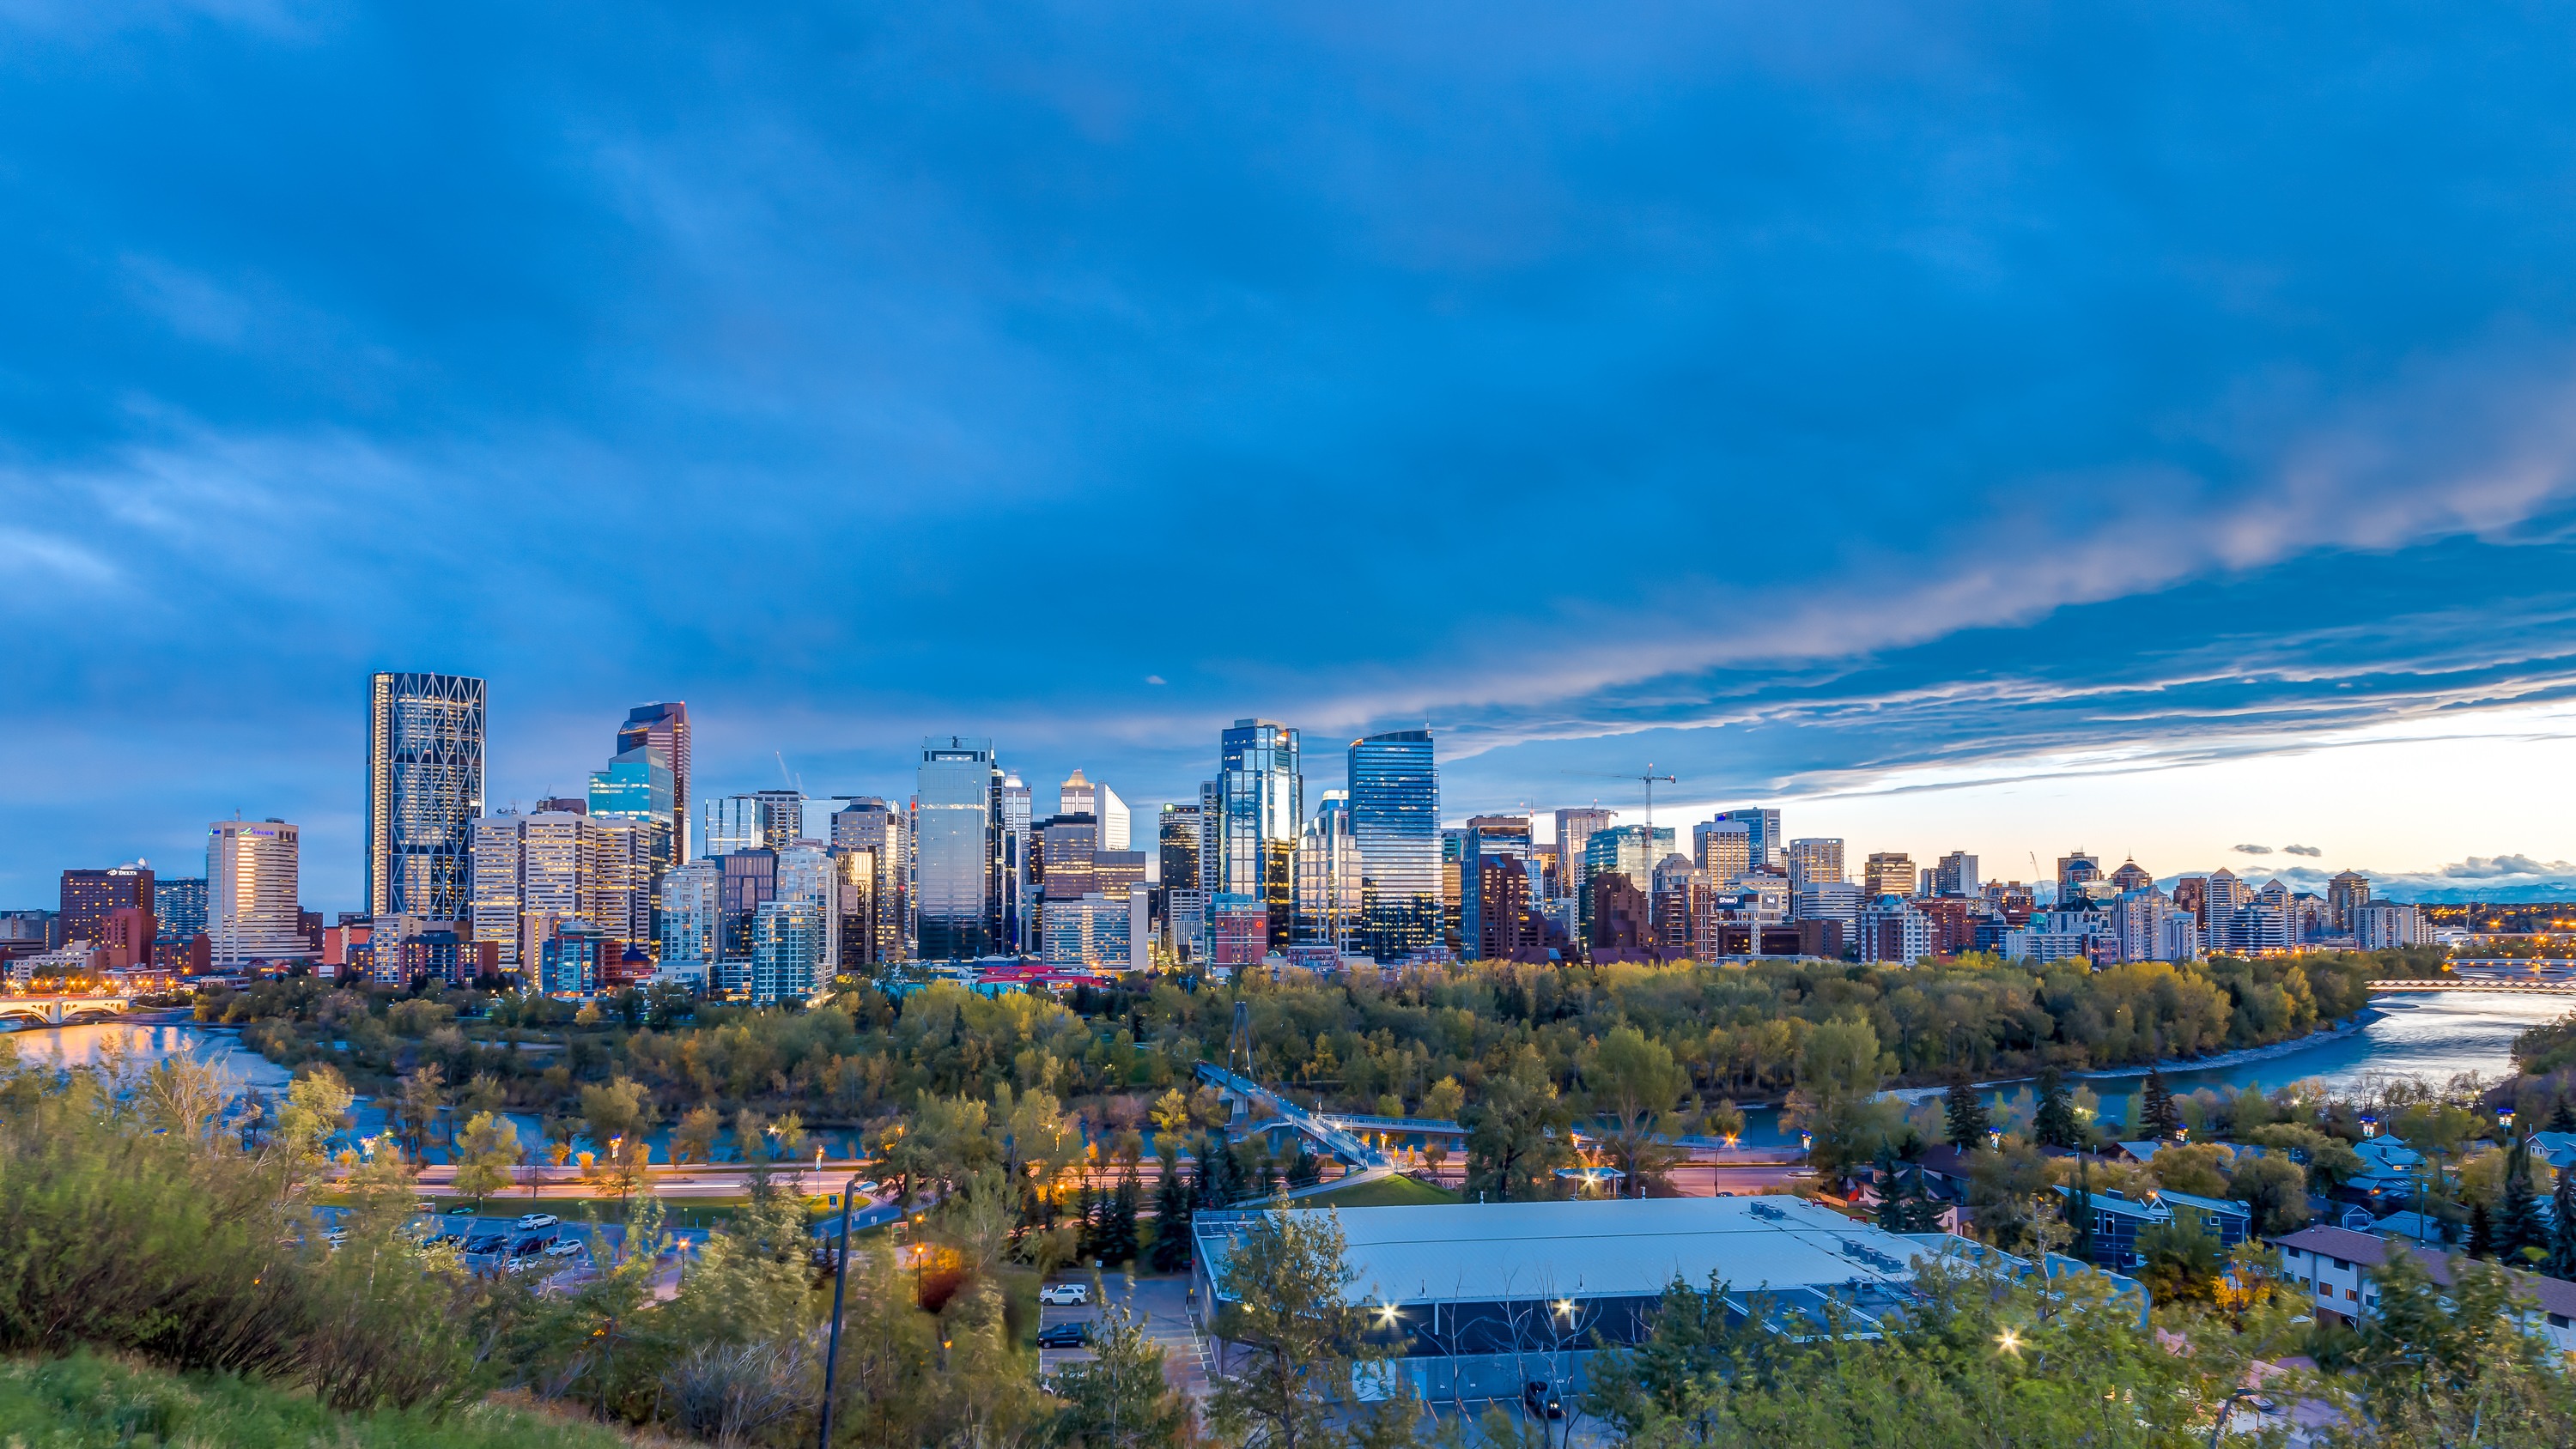 Calgary Real Estate